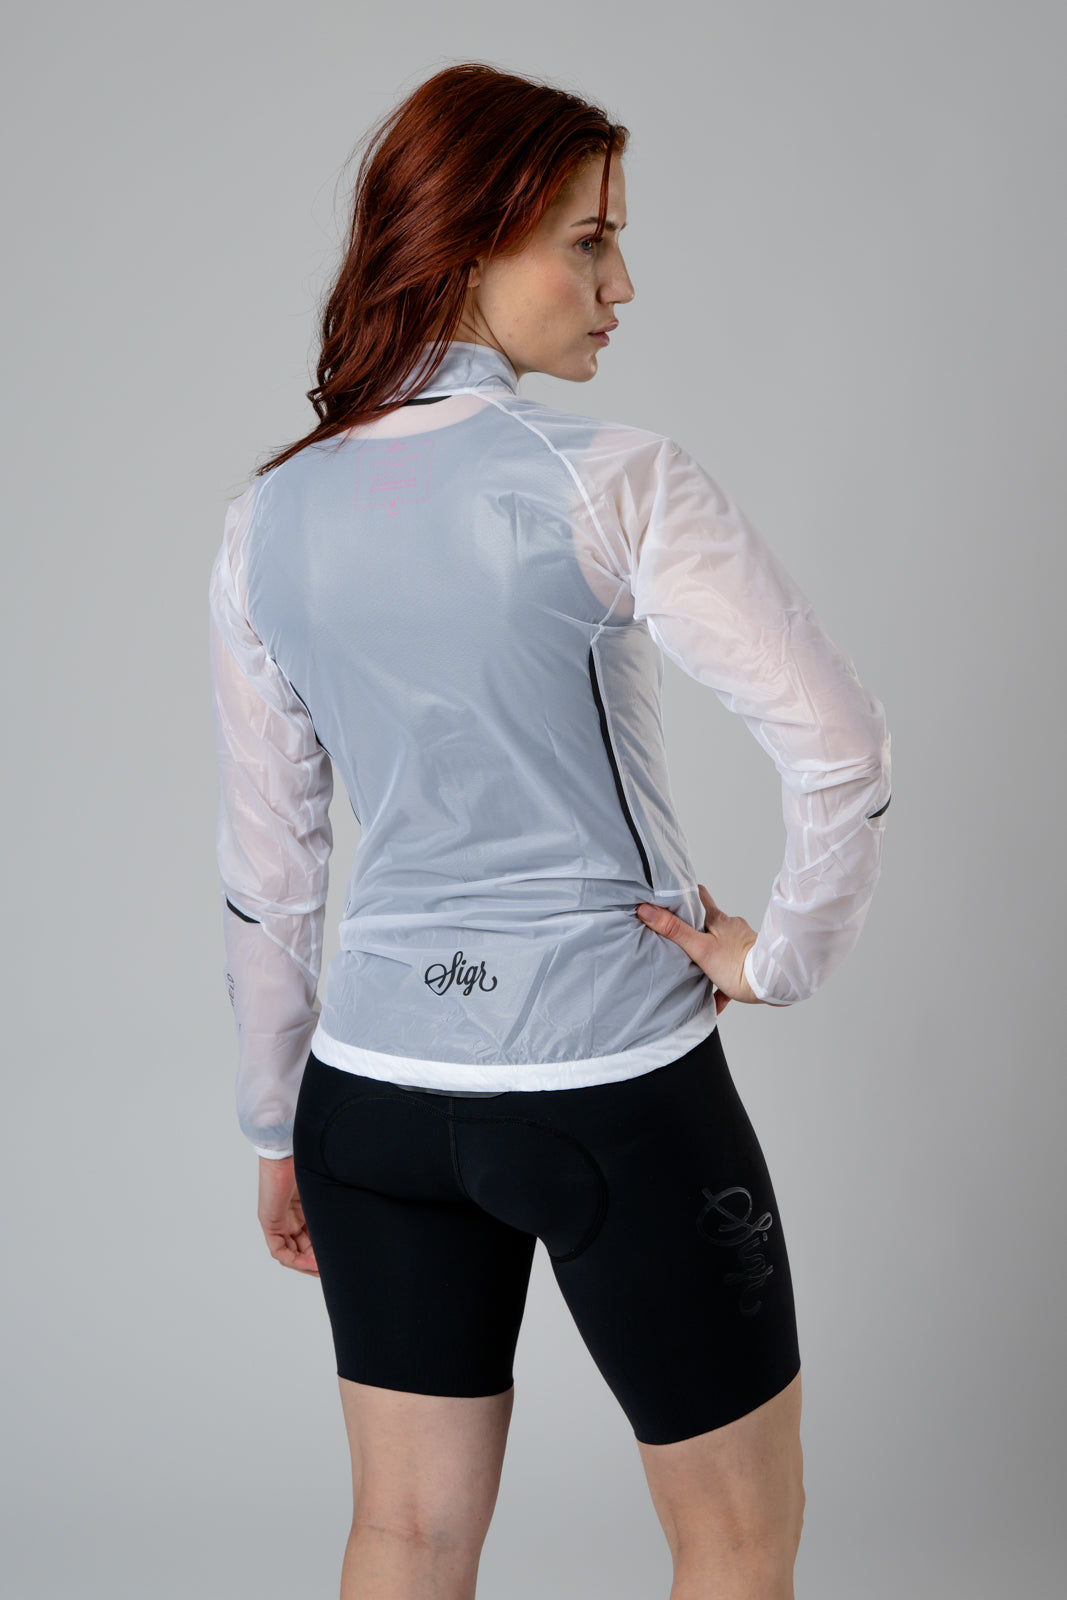 Sigr Näckrosleden - Transparent PRO Cycling Wind/Rain Jacket for Women